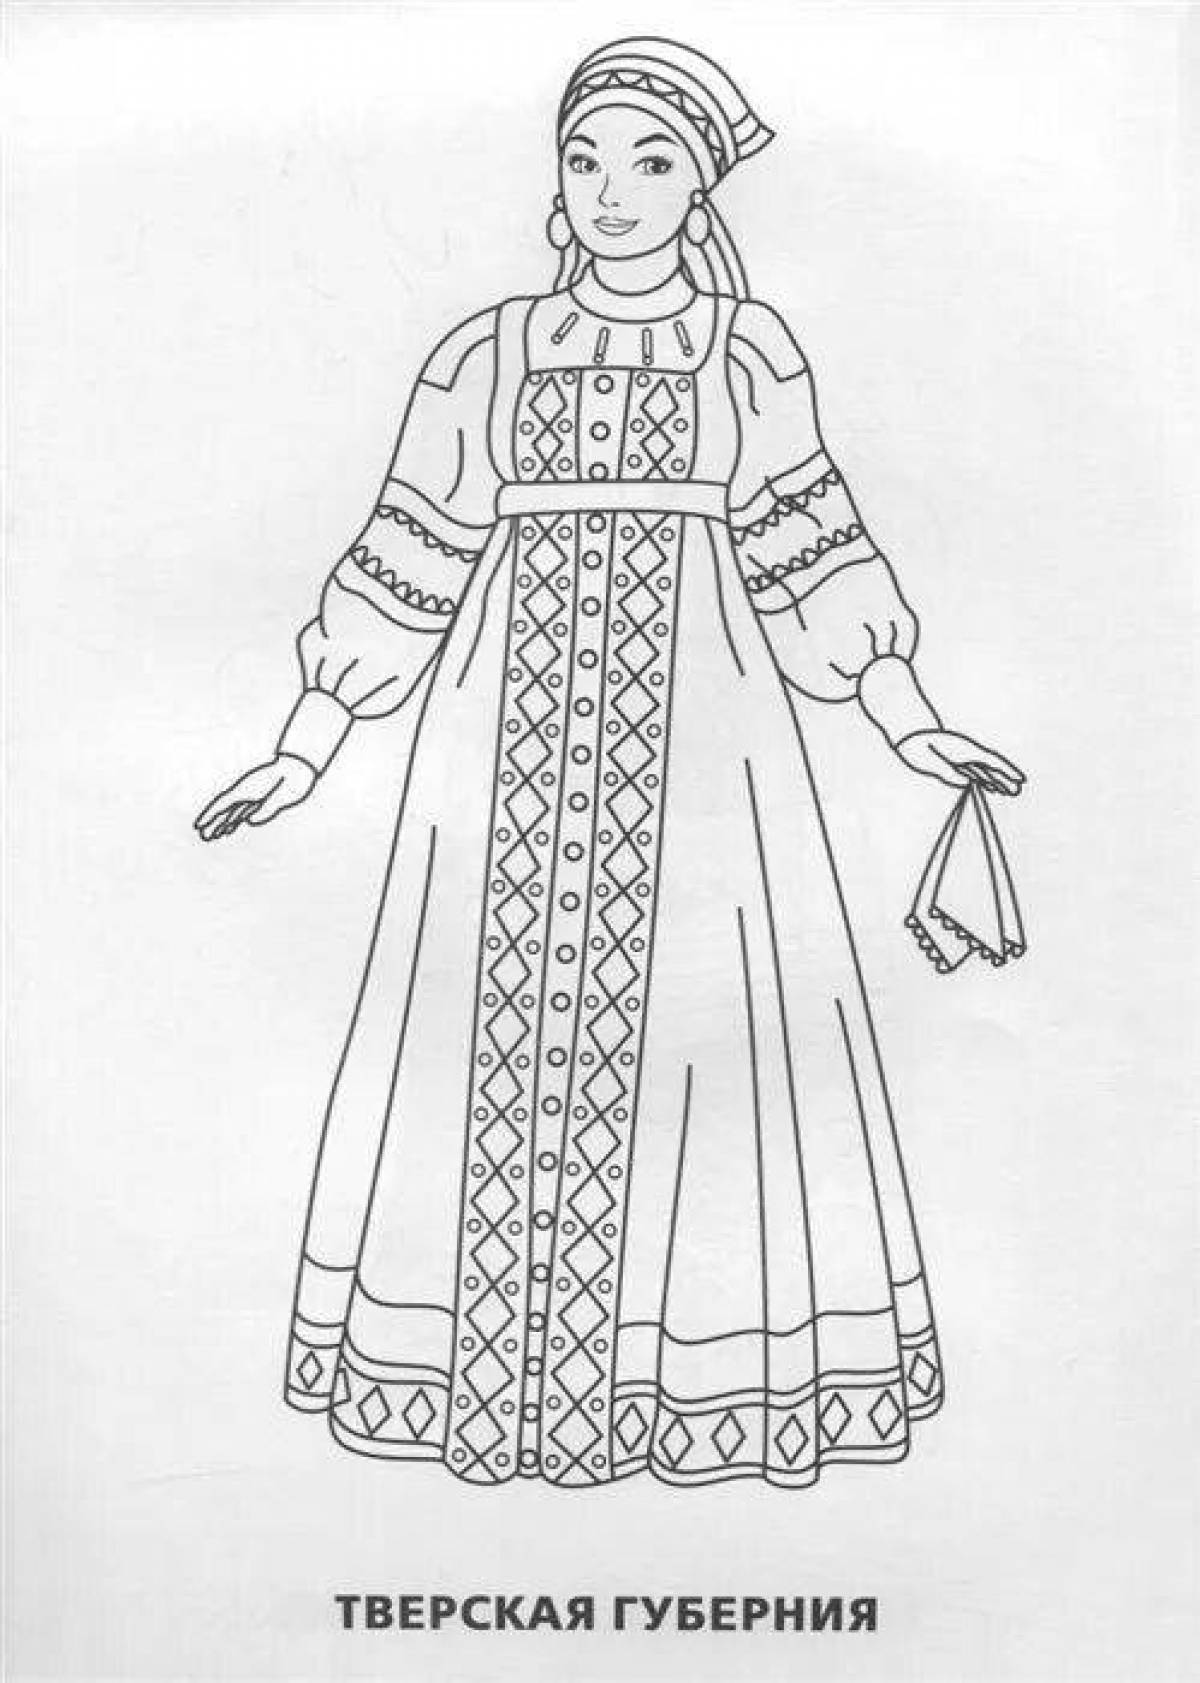 Decorative Russian women's folk costume